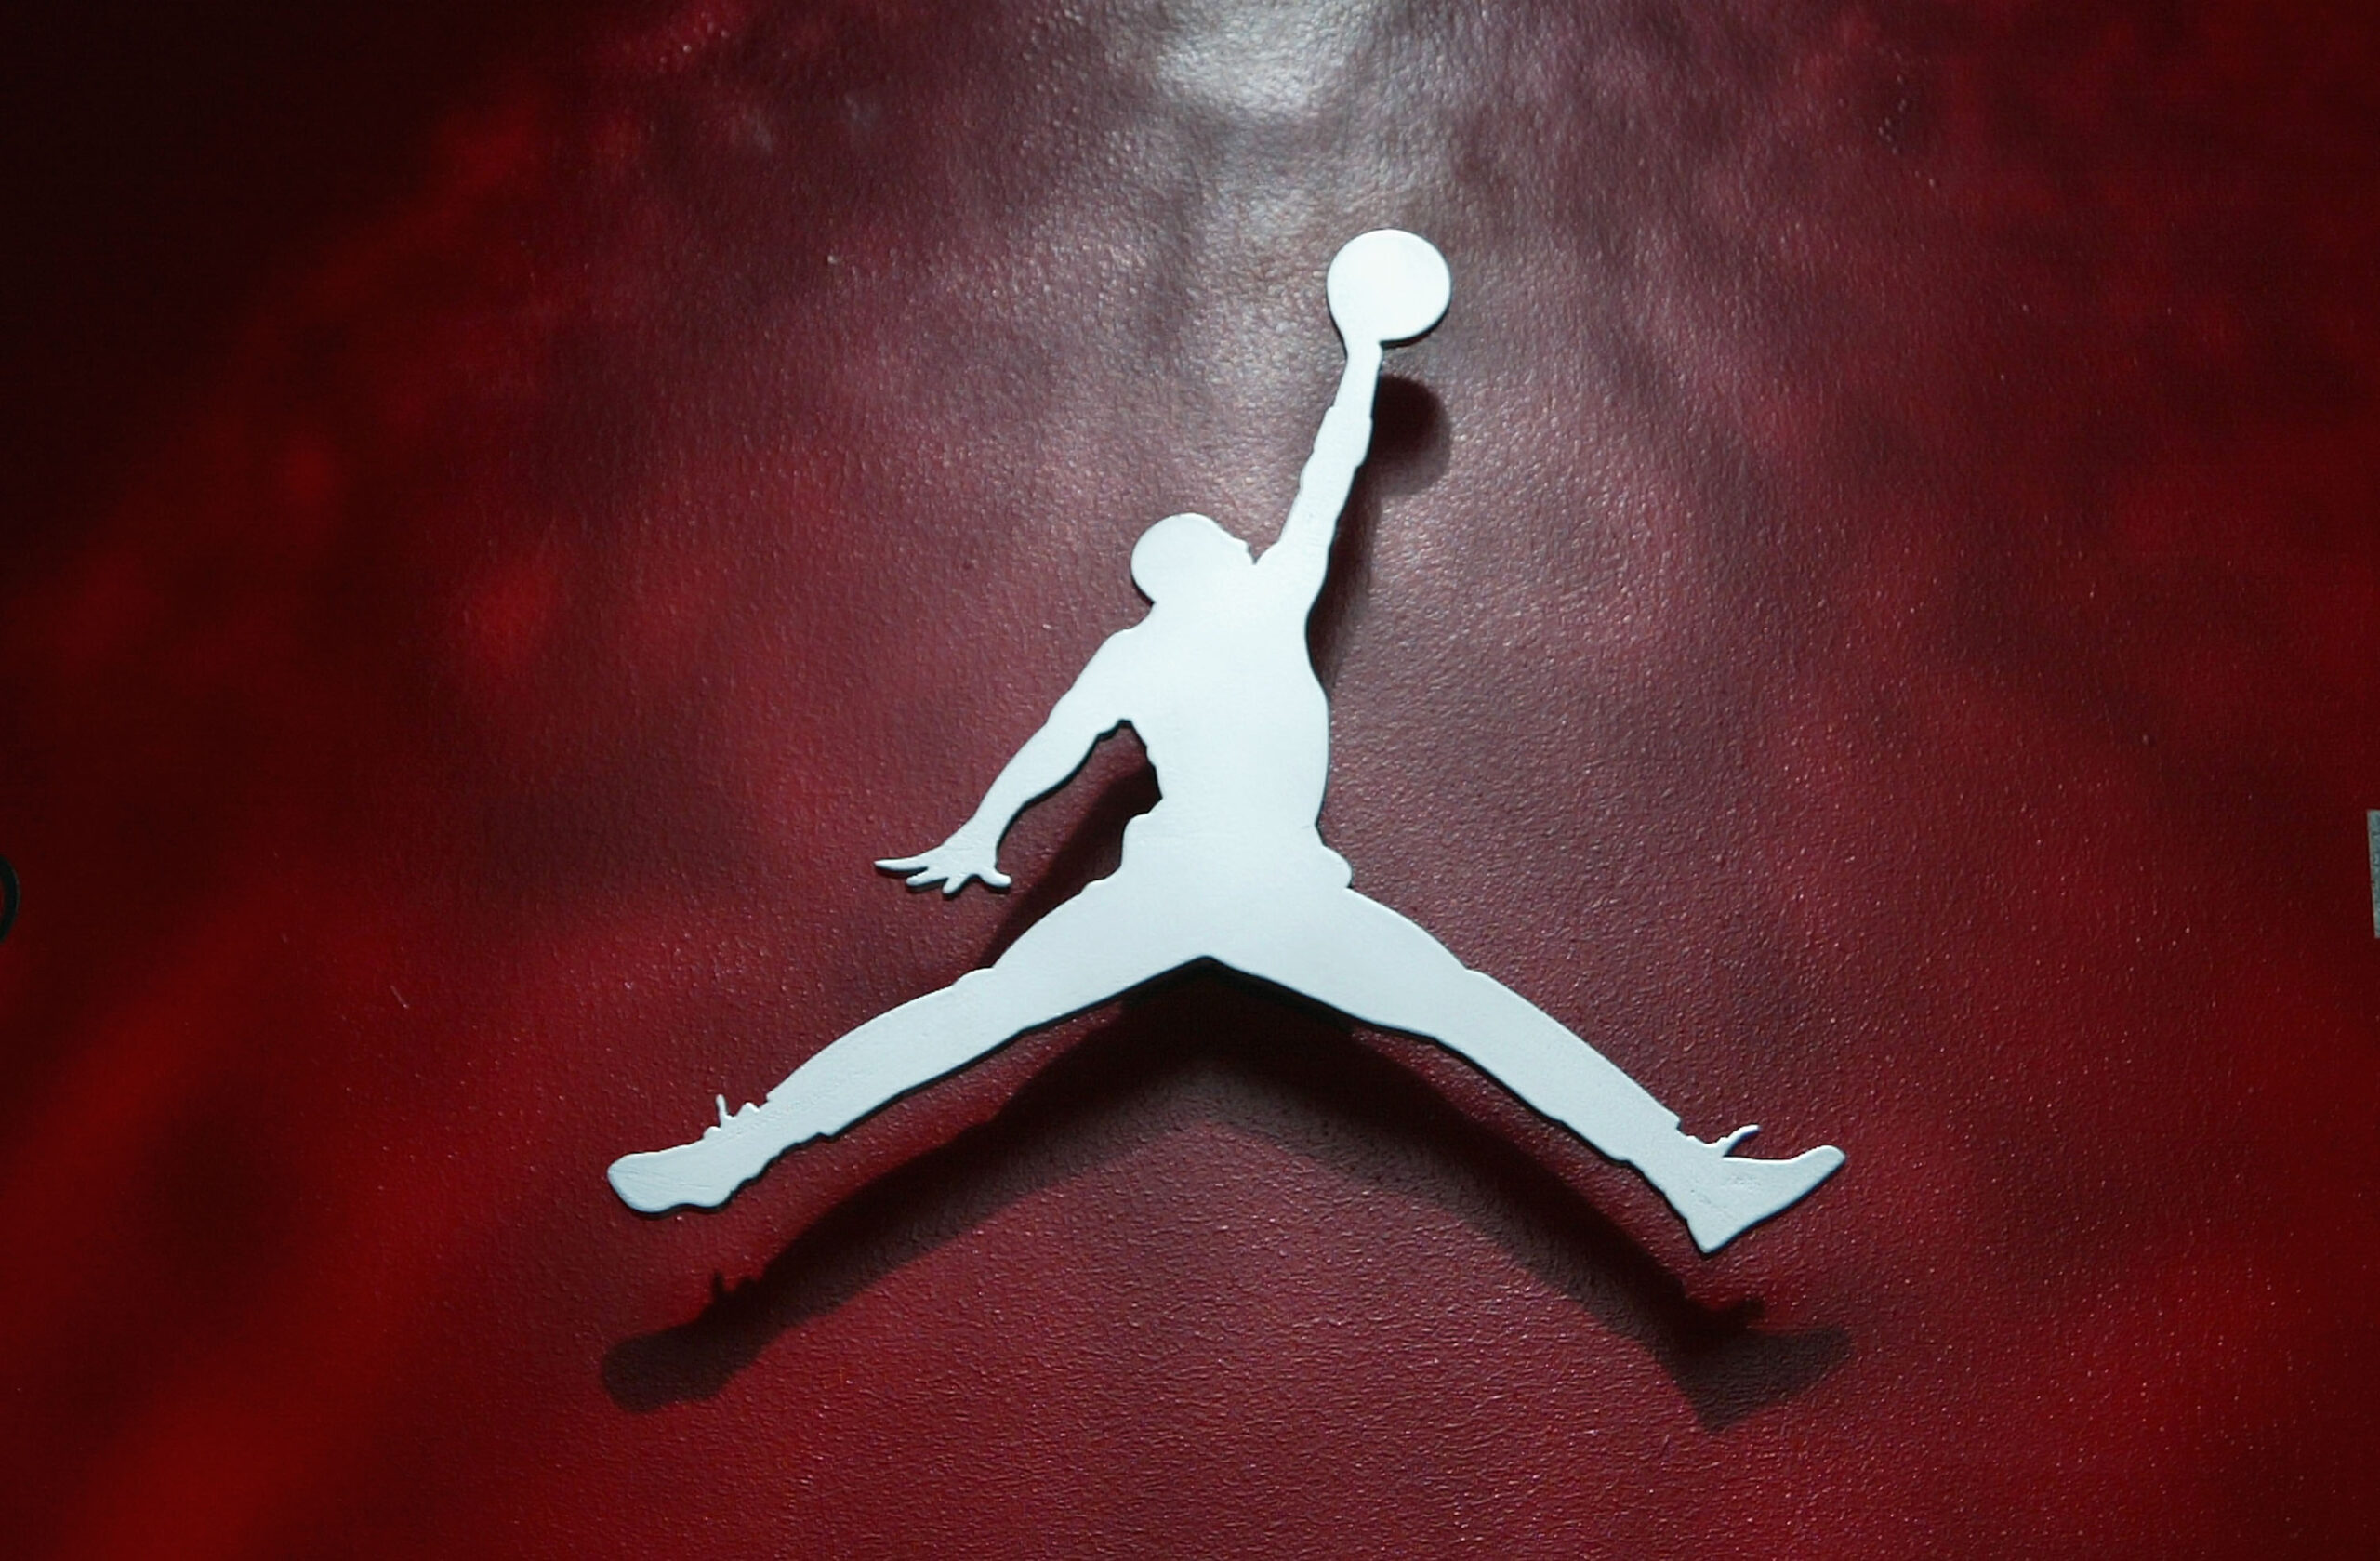 Air Jordan 1 High OG “Legend Medium Brown” Official Photos